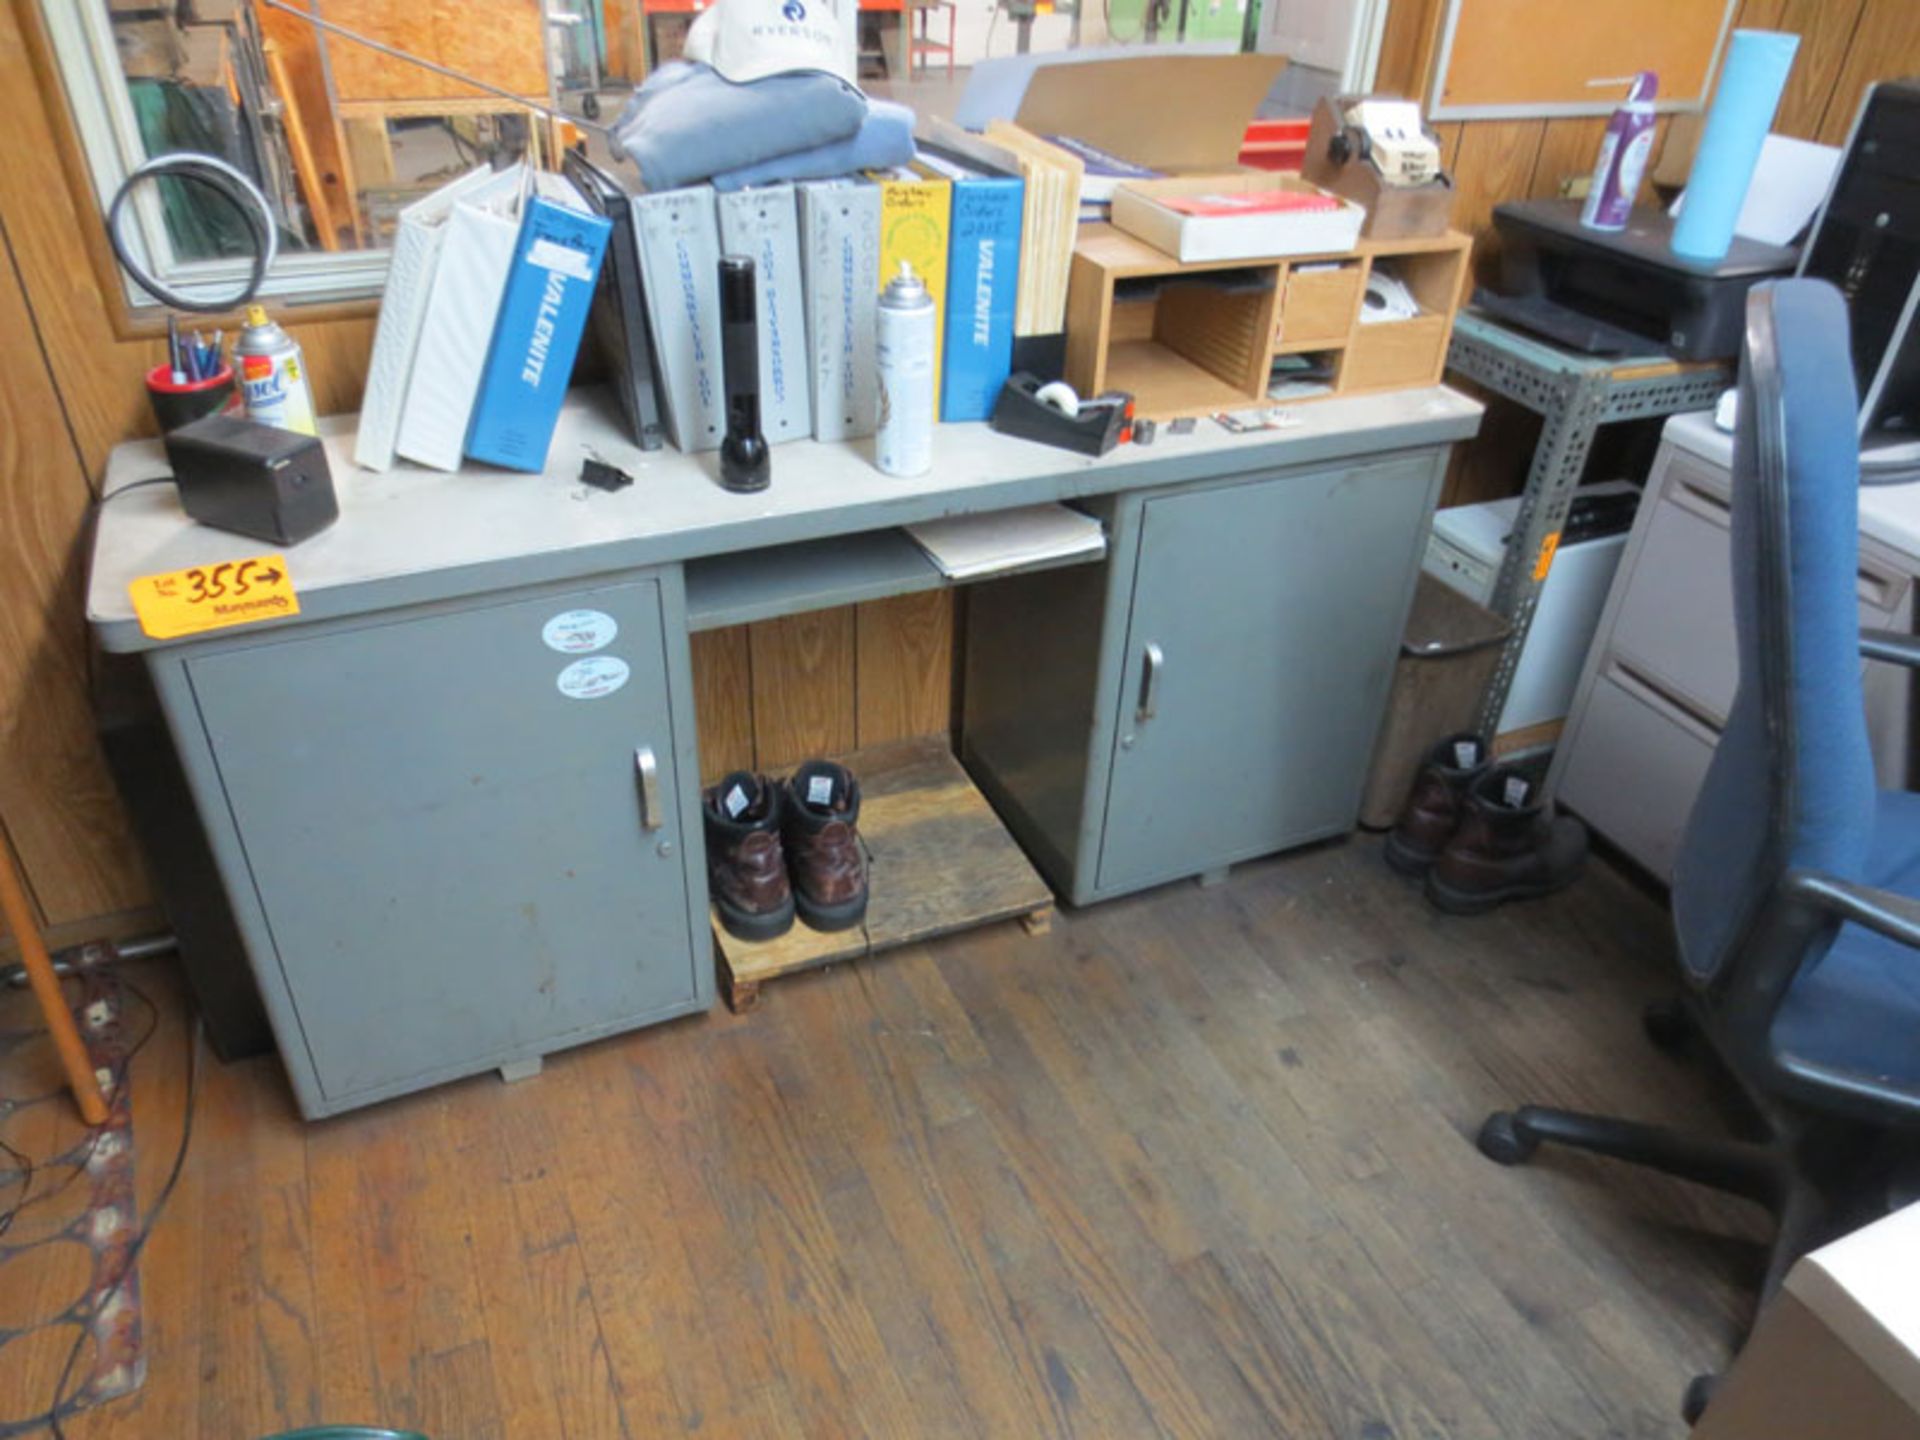 Office Furniture (2) Desks 1 With Return, Metal Shelves, Metal Credenza. NO CONTENTS